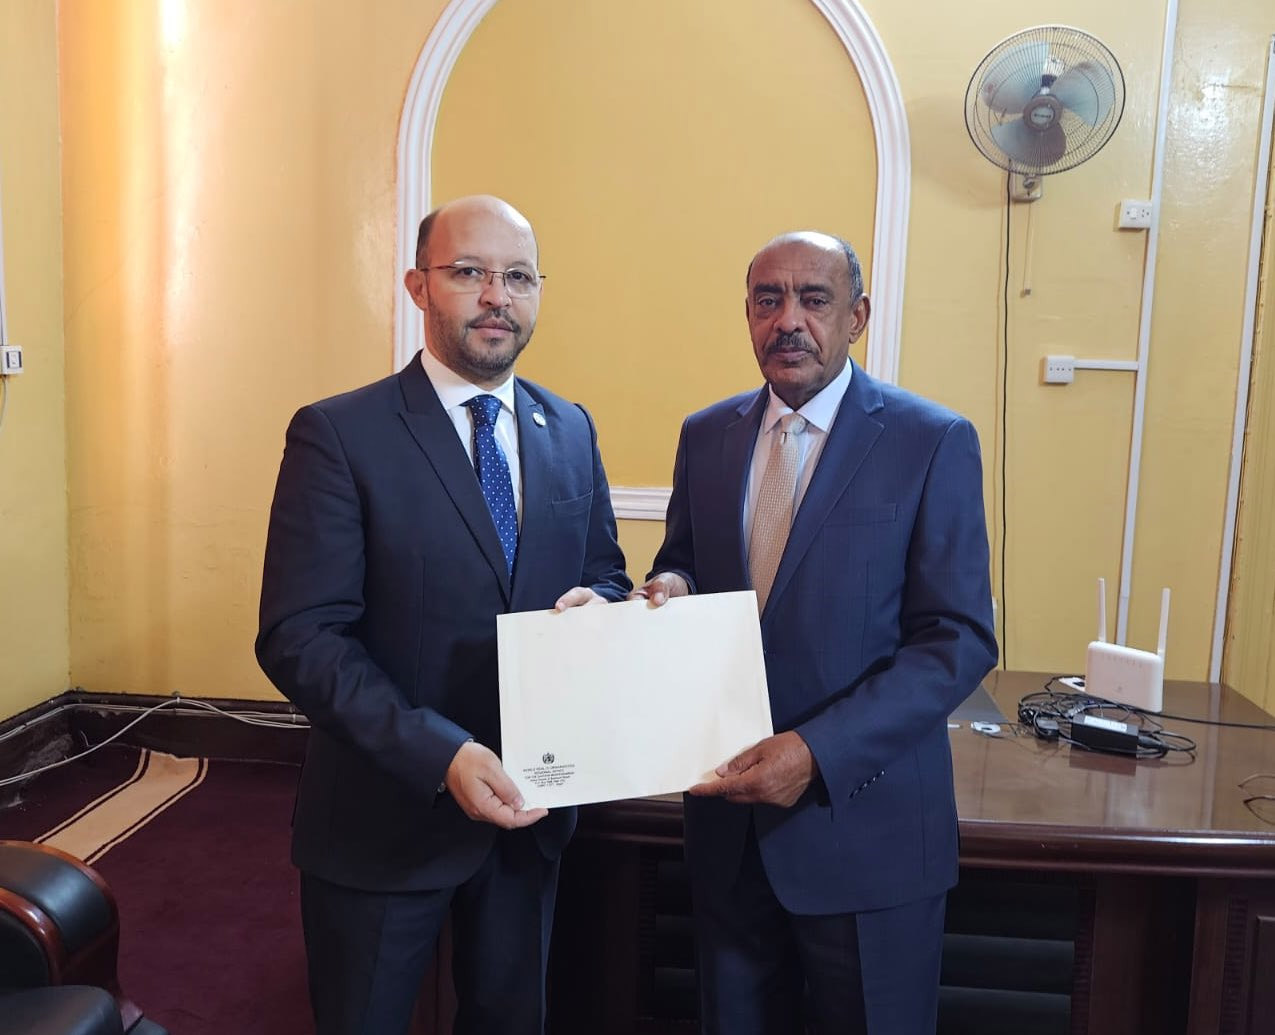 New WHO Representative and Head of Mission in Sudan presents his credentials to Government of Sudan